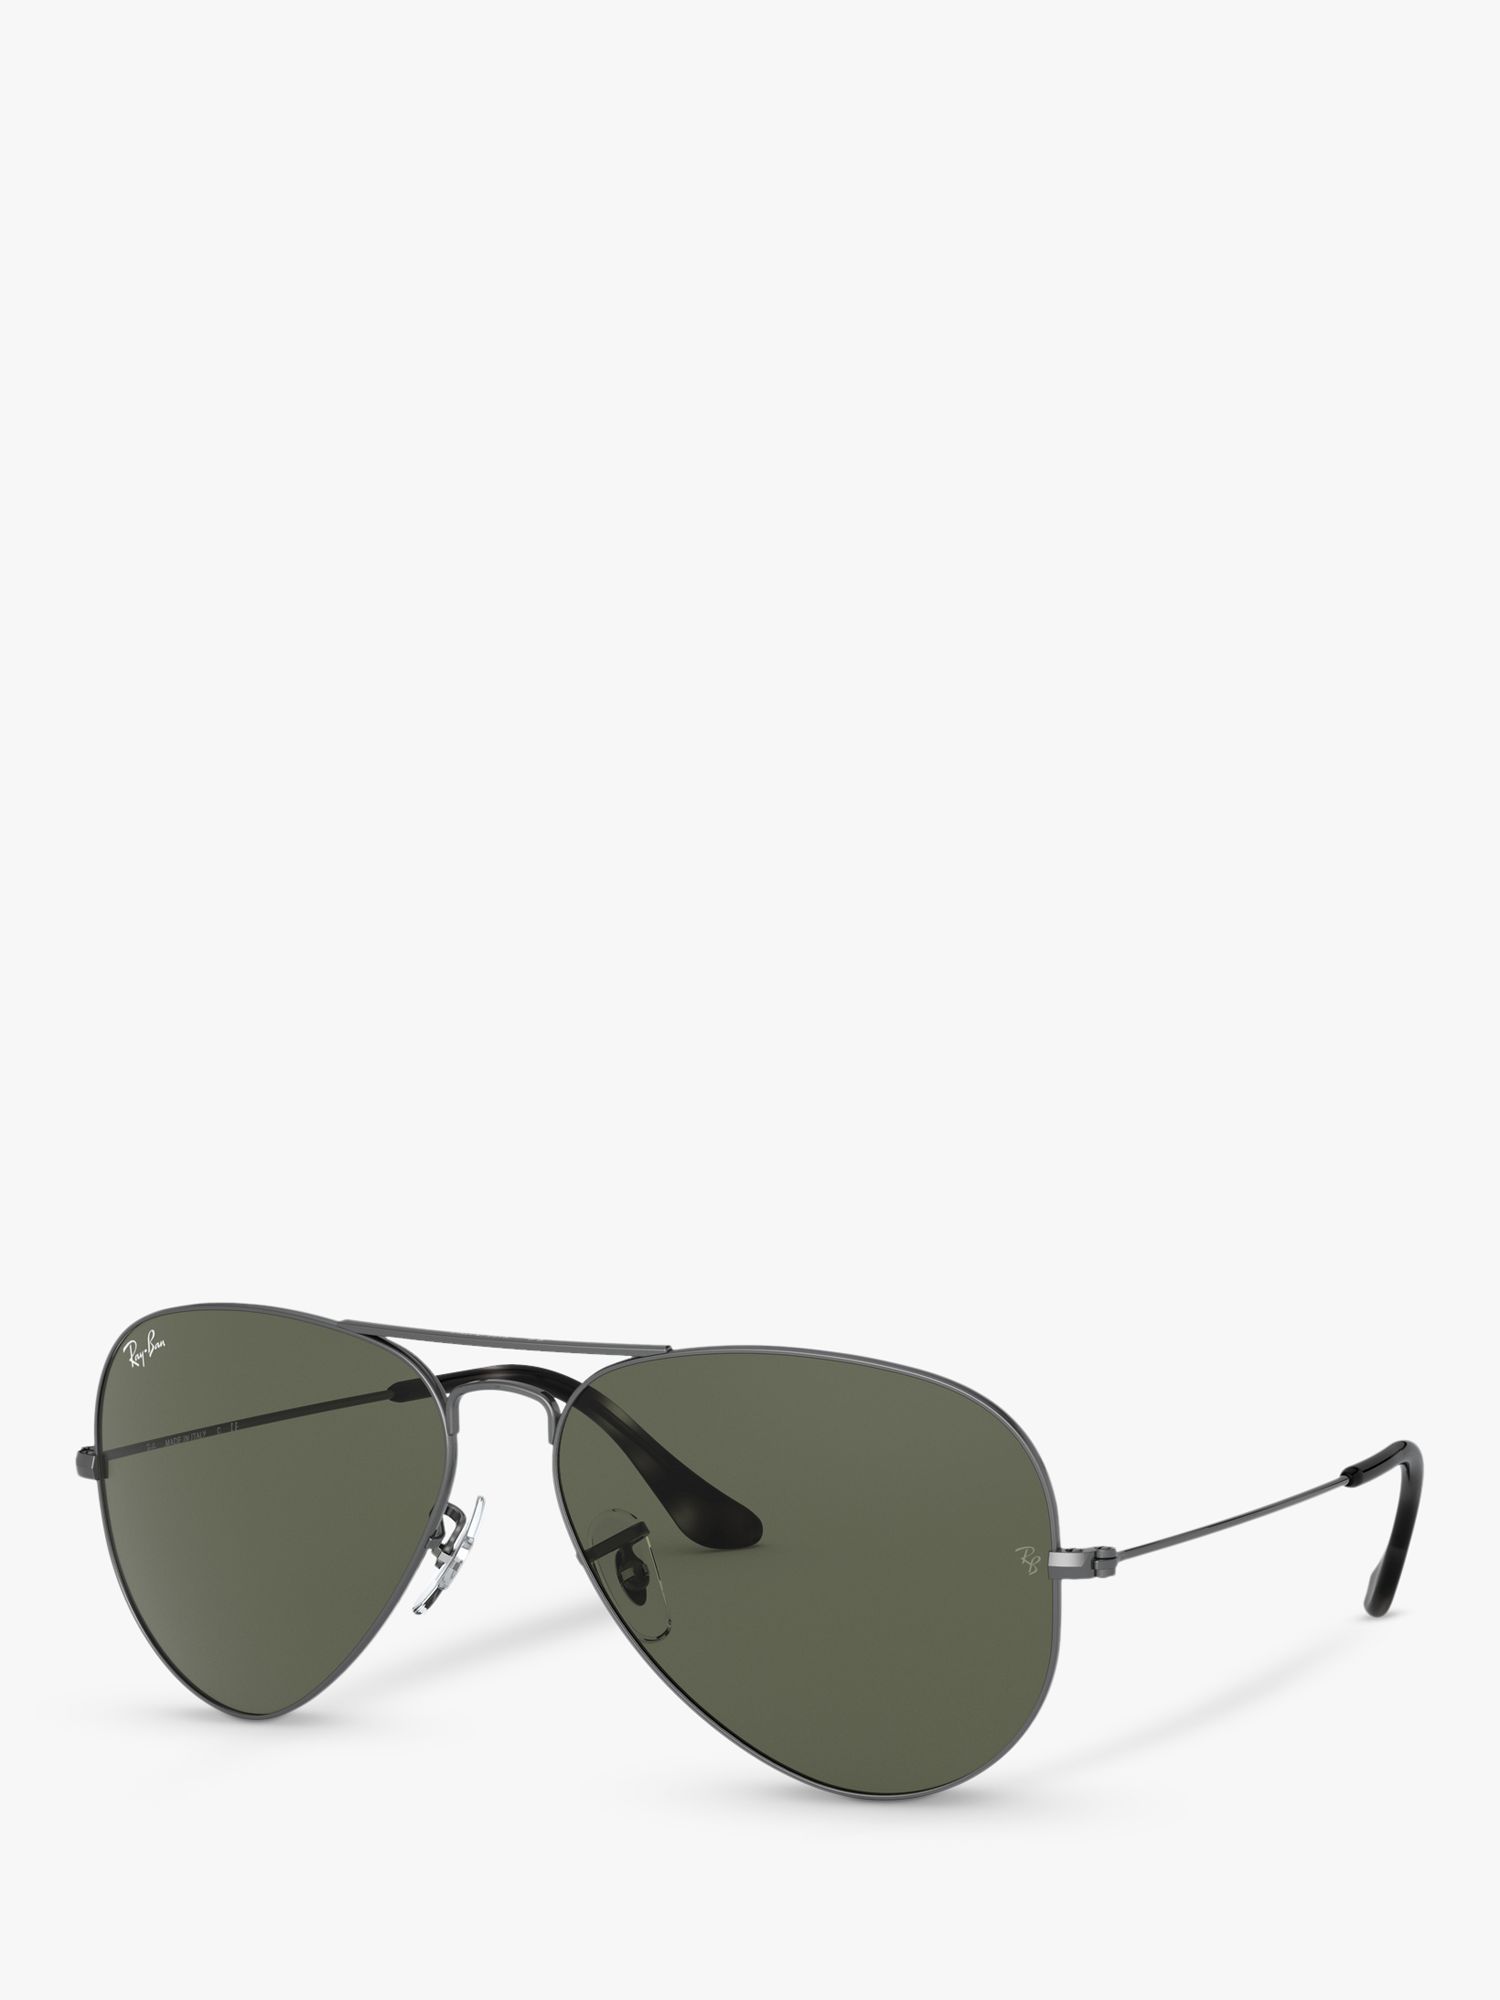 Men's Ray-Ban Aviator Sunglasses | John Lewis & Partners